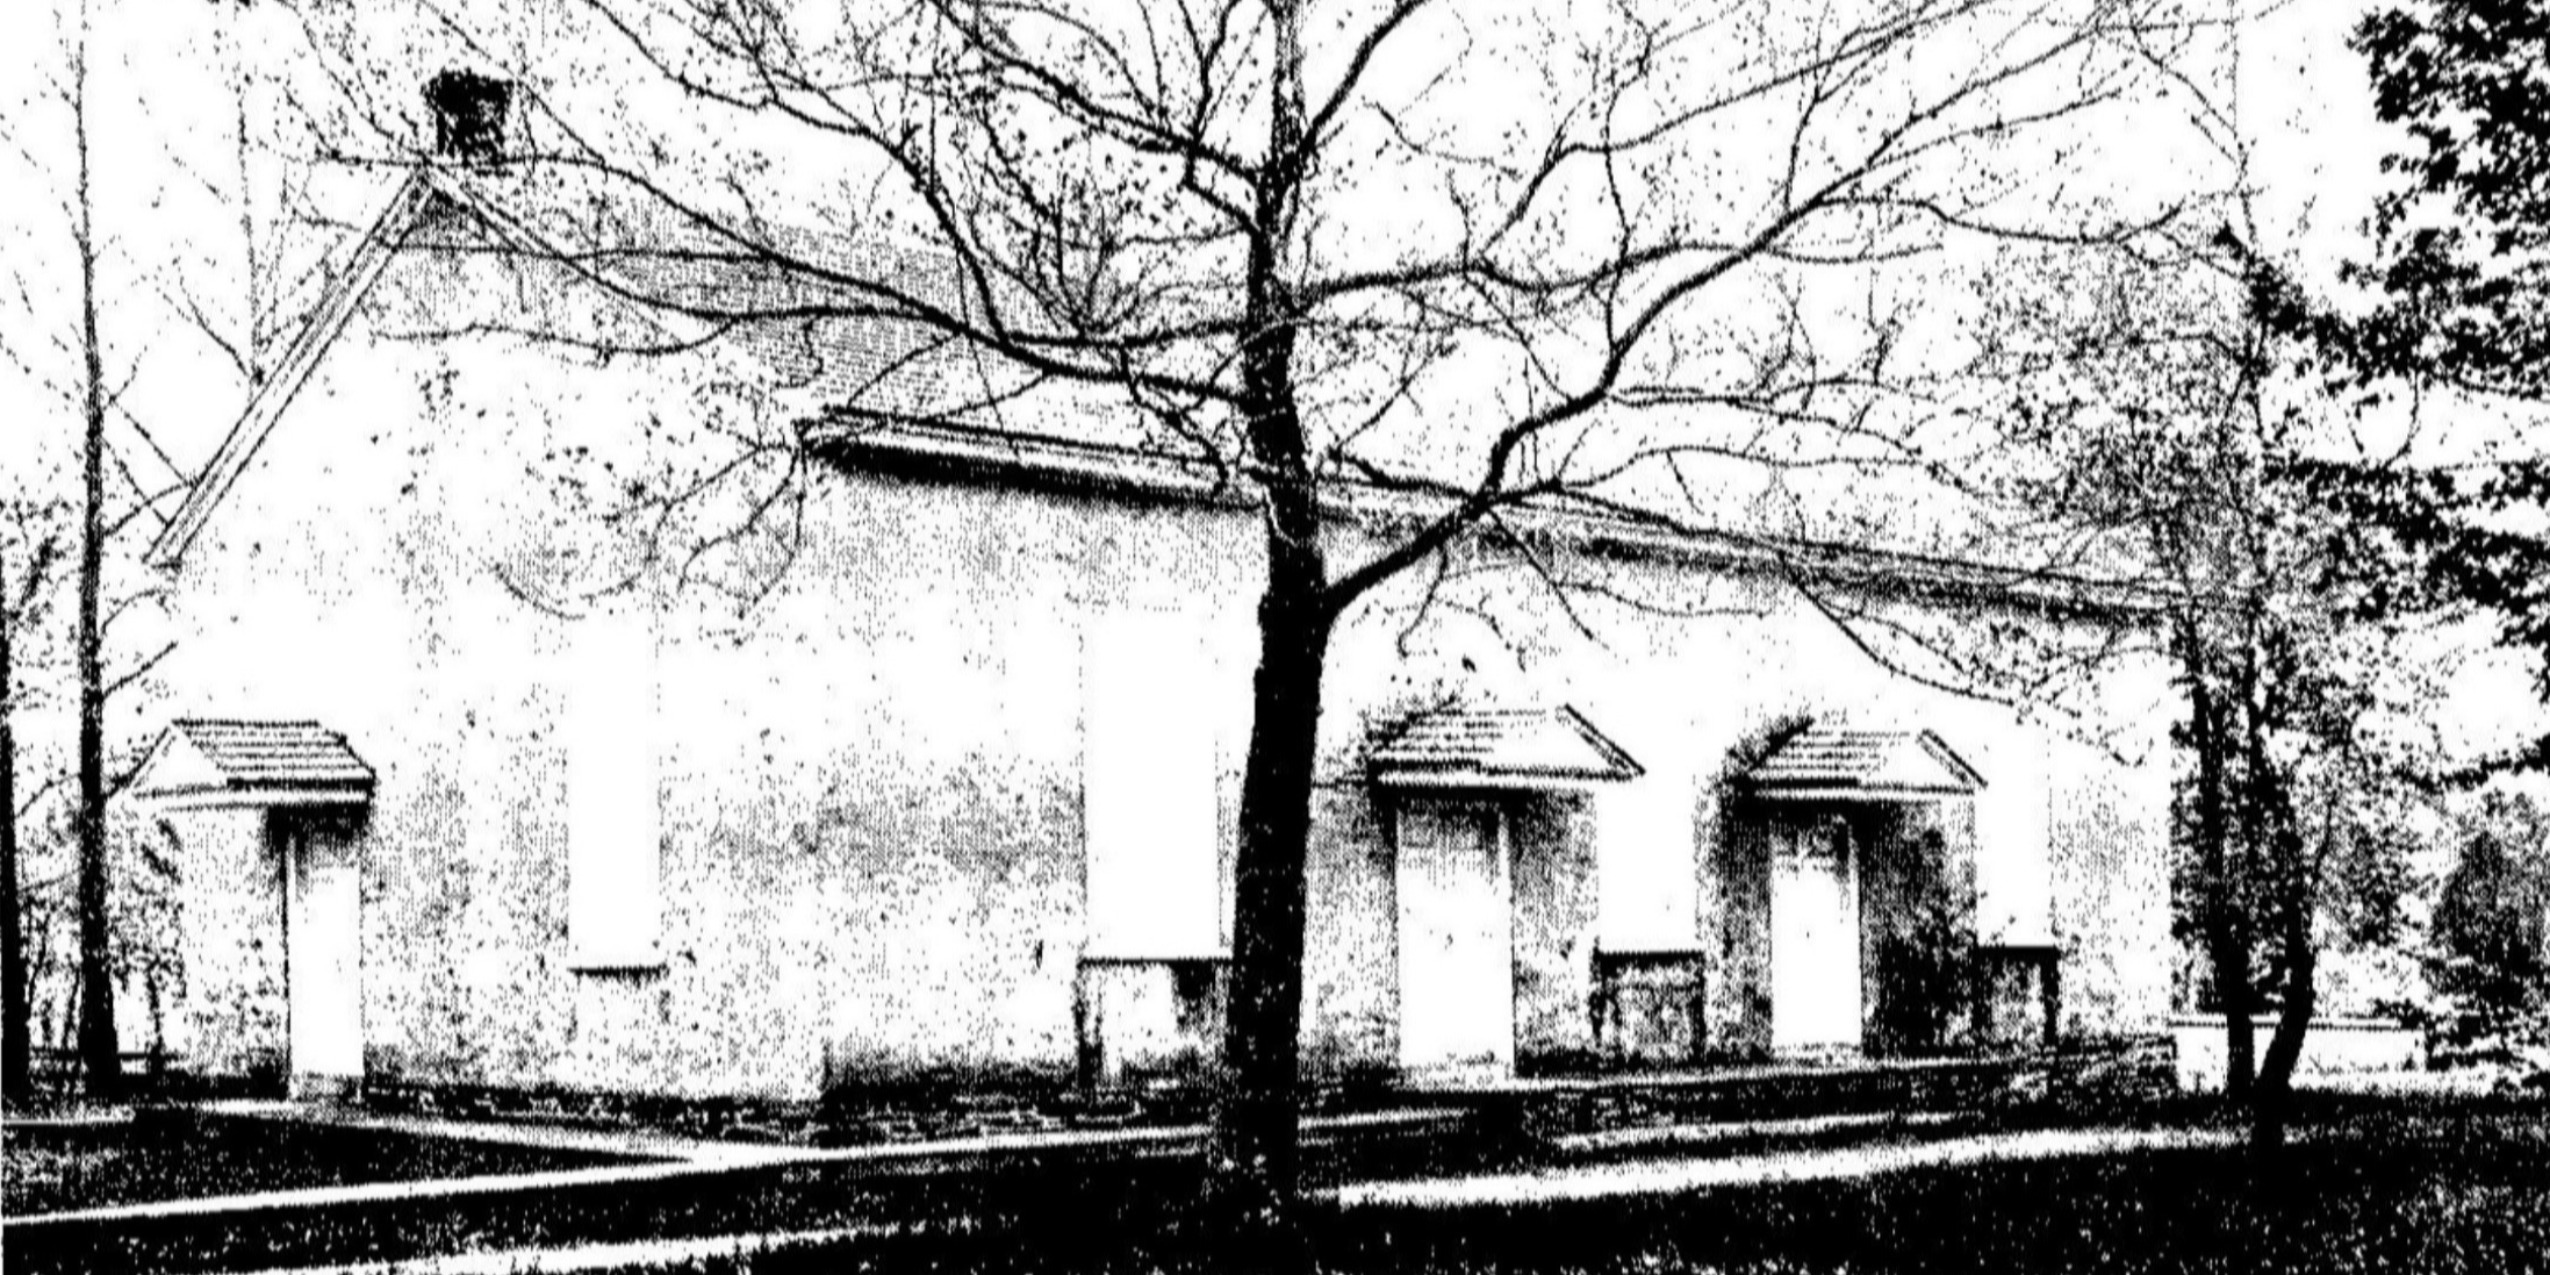 Meeting House c. 1845